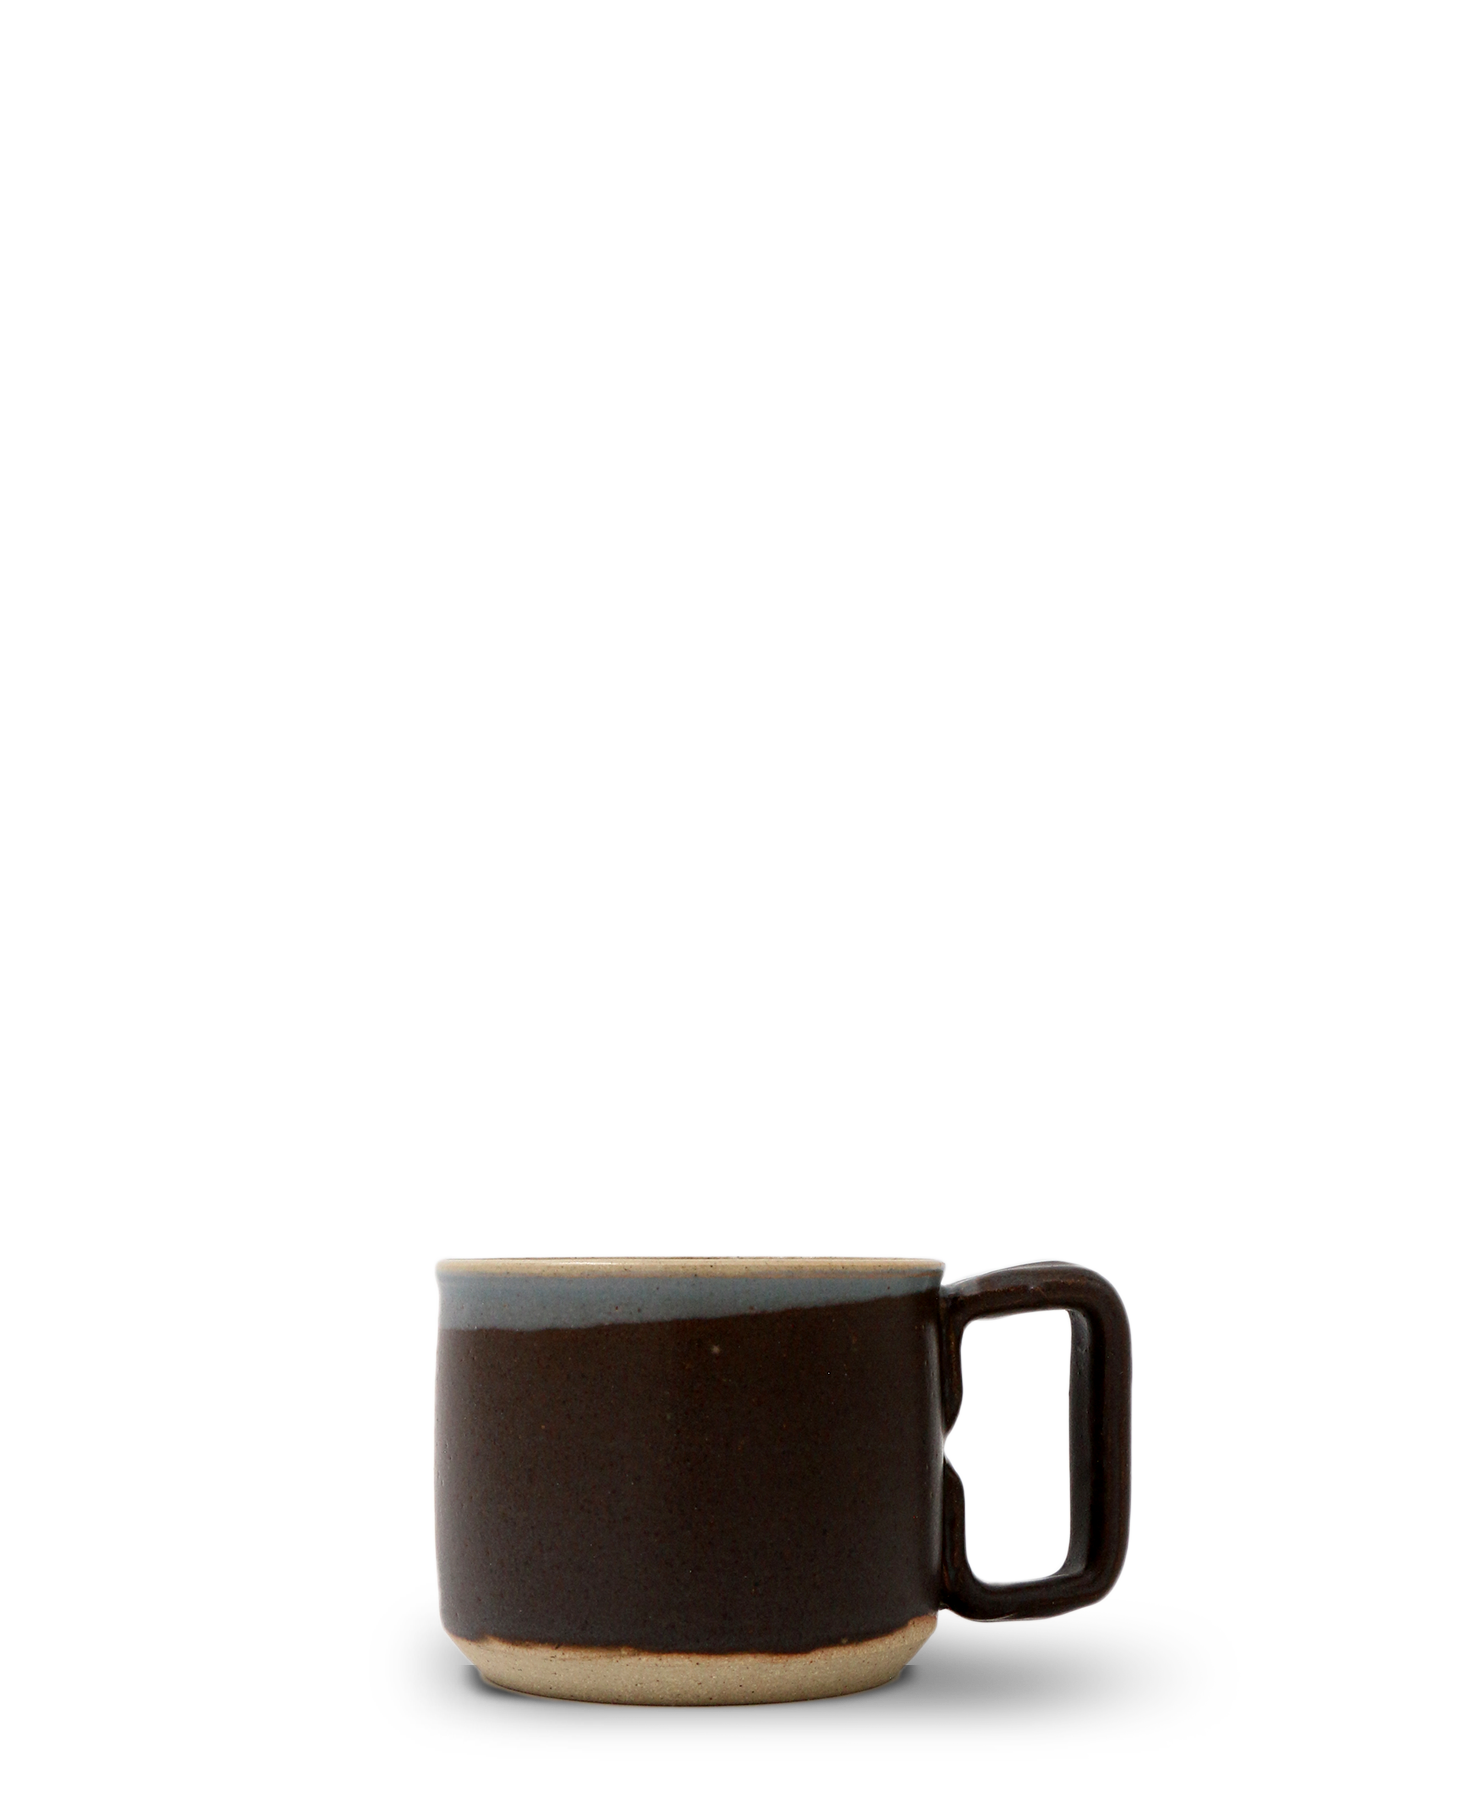 Porcelain Ceramic Doubleshot Espresso Cup - The Bright Angle